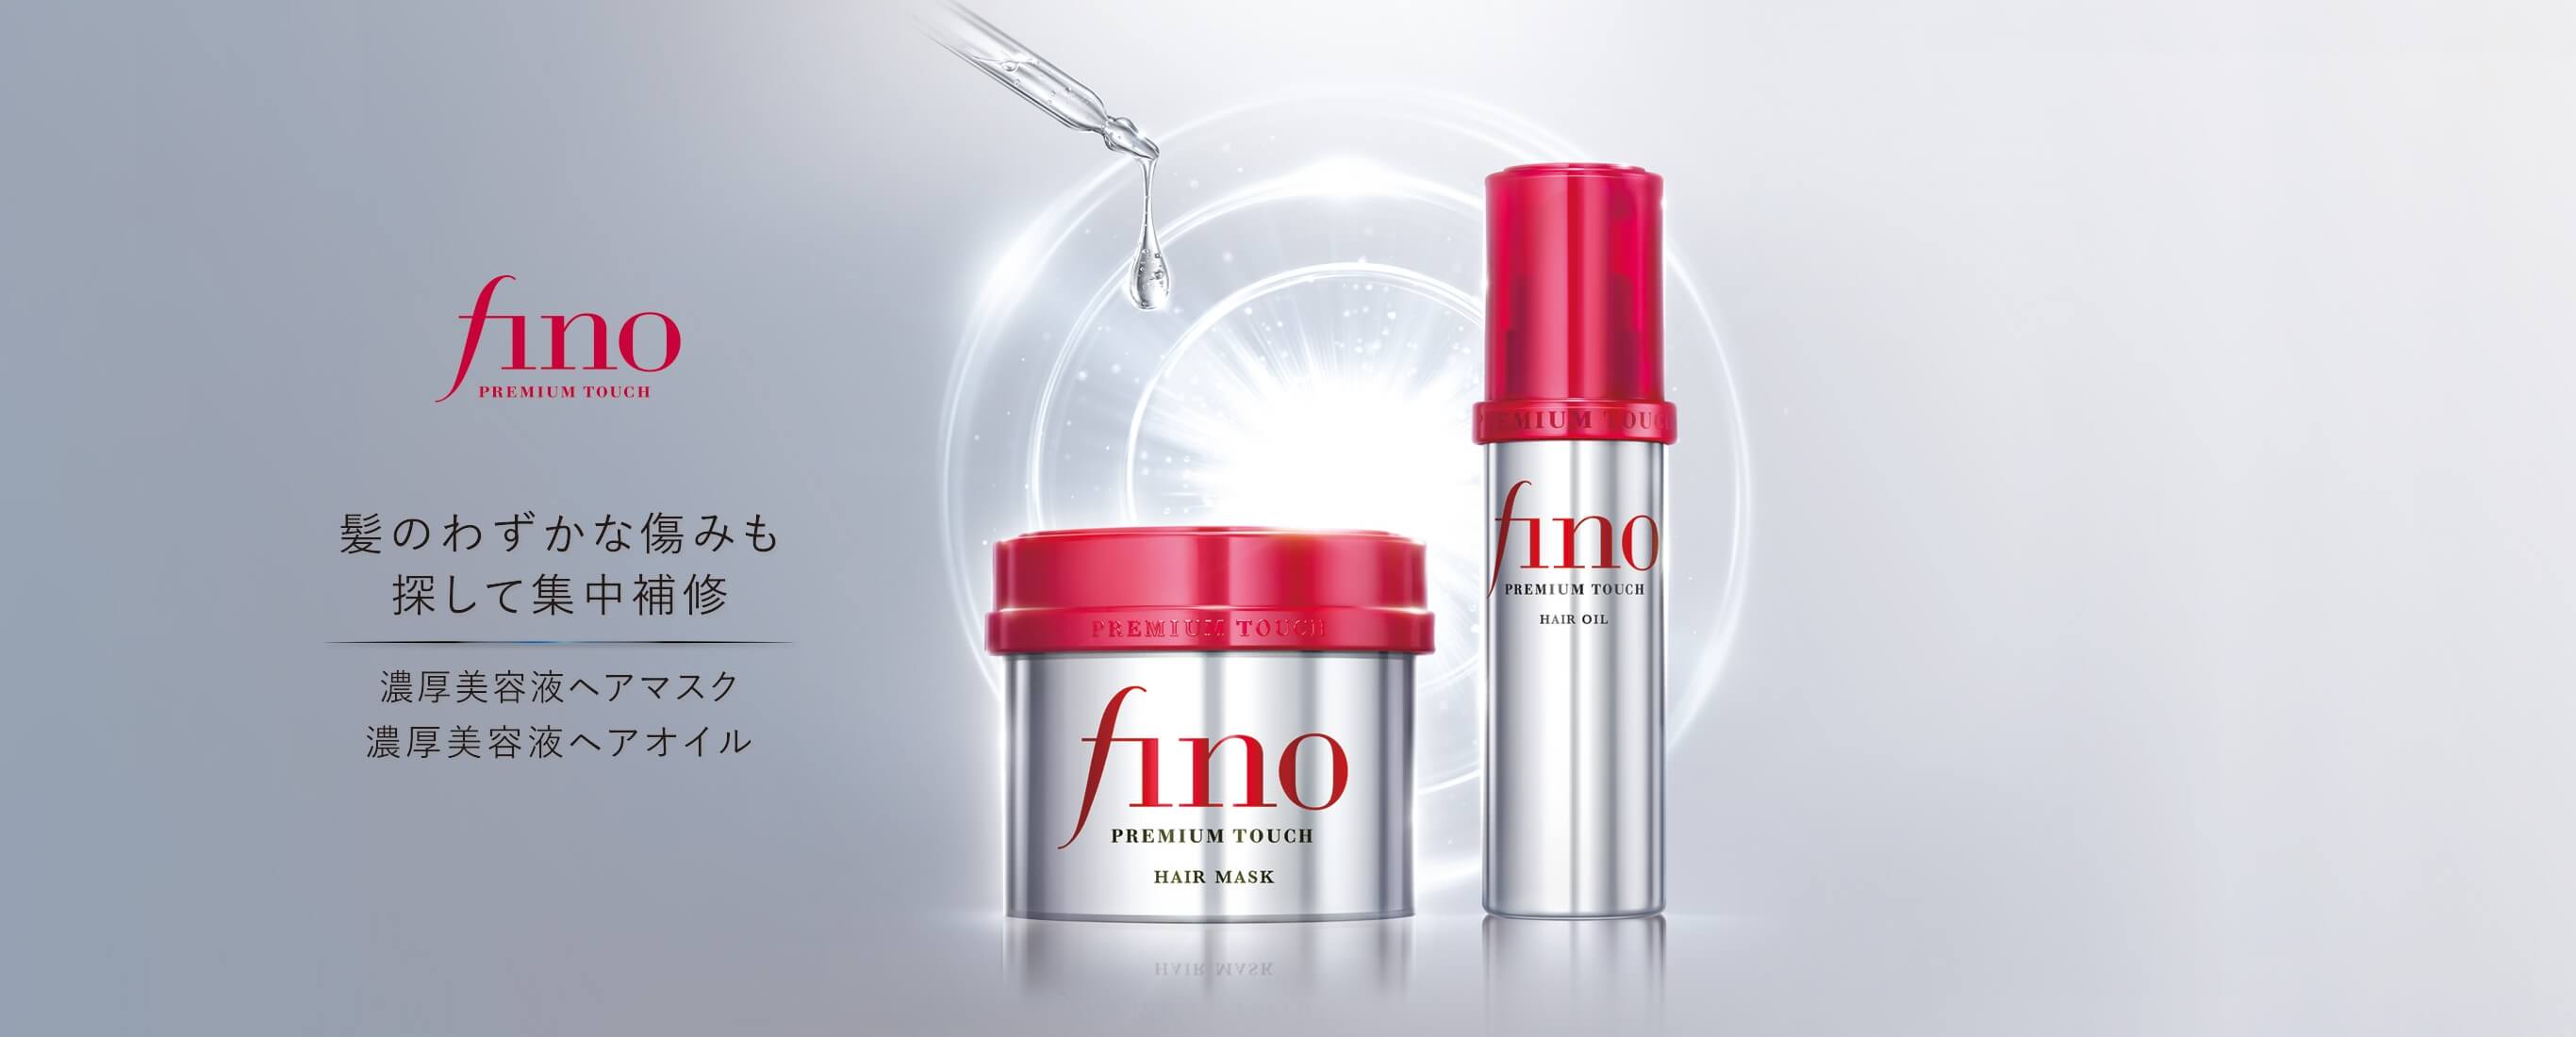 Shiseido Fino Premium Touch Penetrating Hair Essence Mask